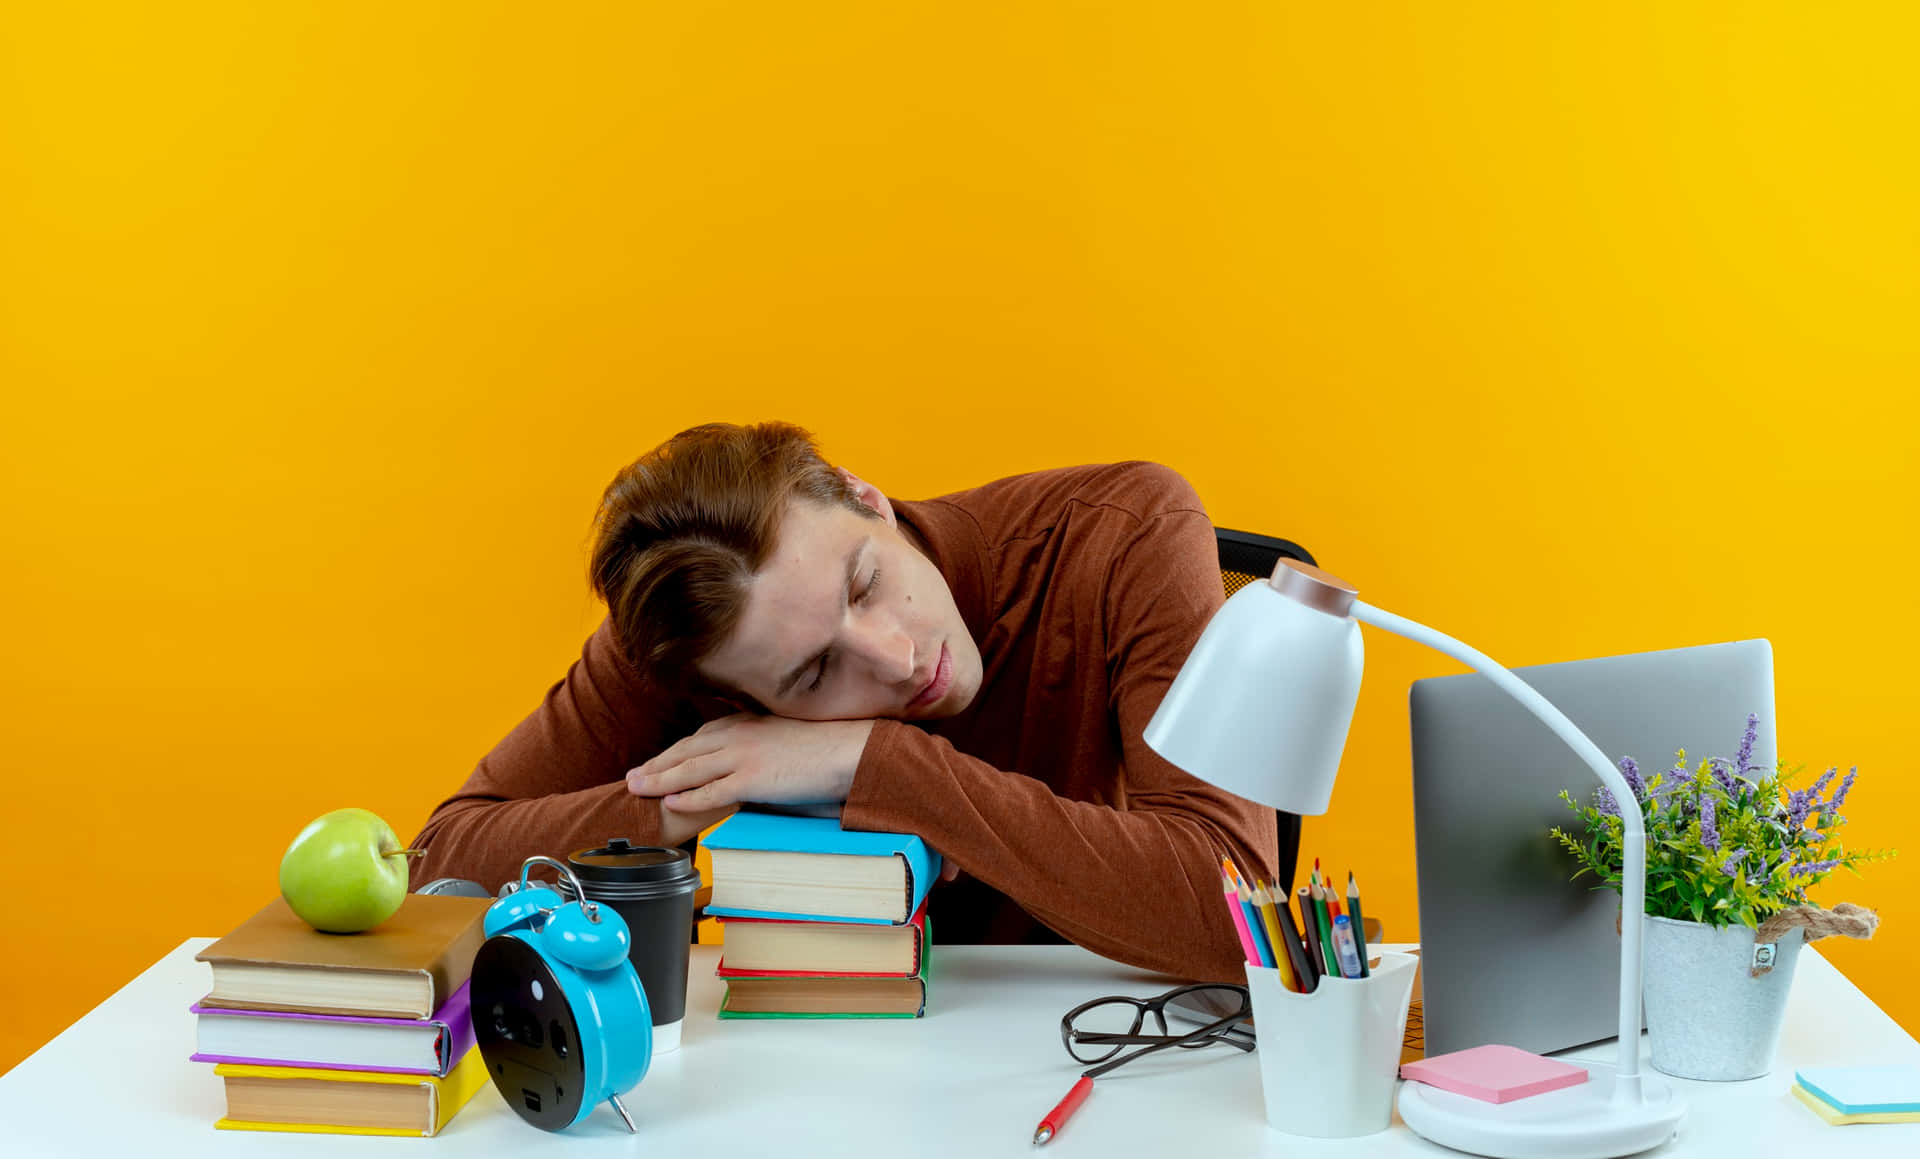 Tired Student Asleepat Desk.jpg Wallpaper